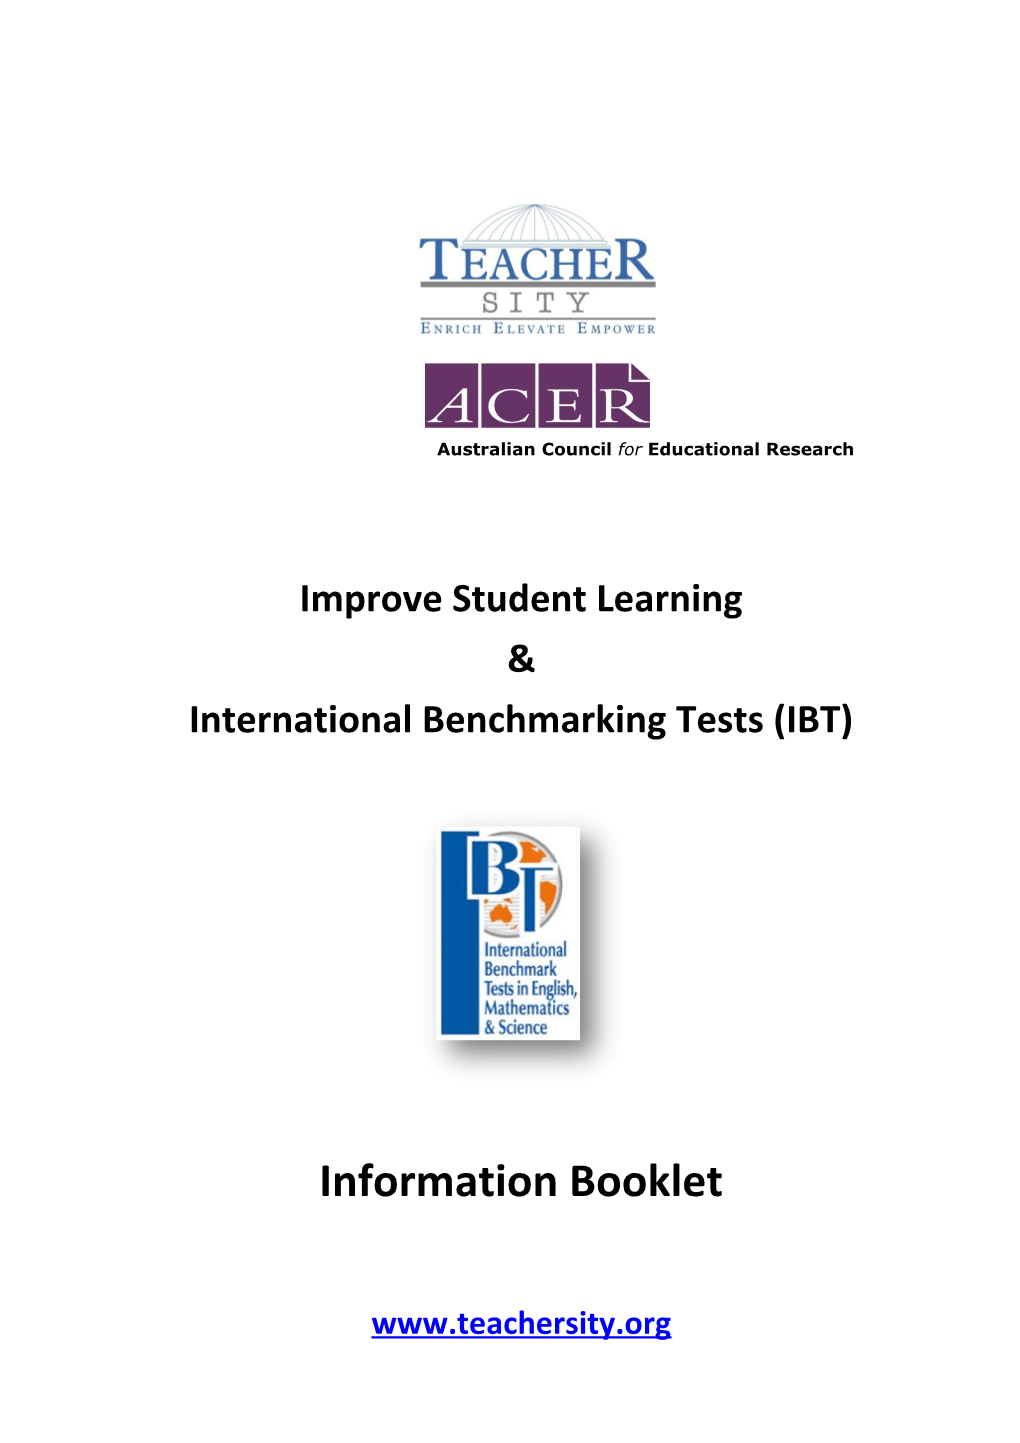 International Benchmarking Tests (IBT)